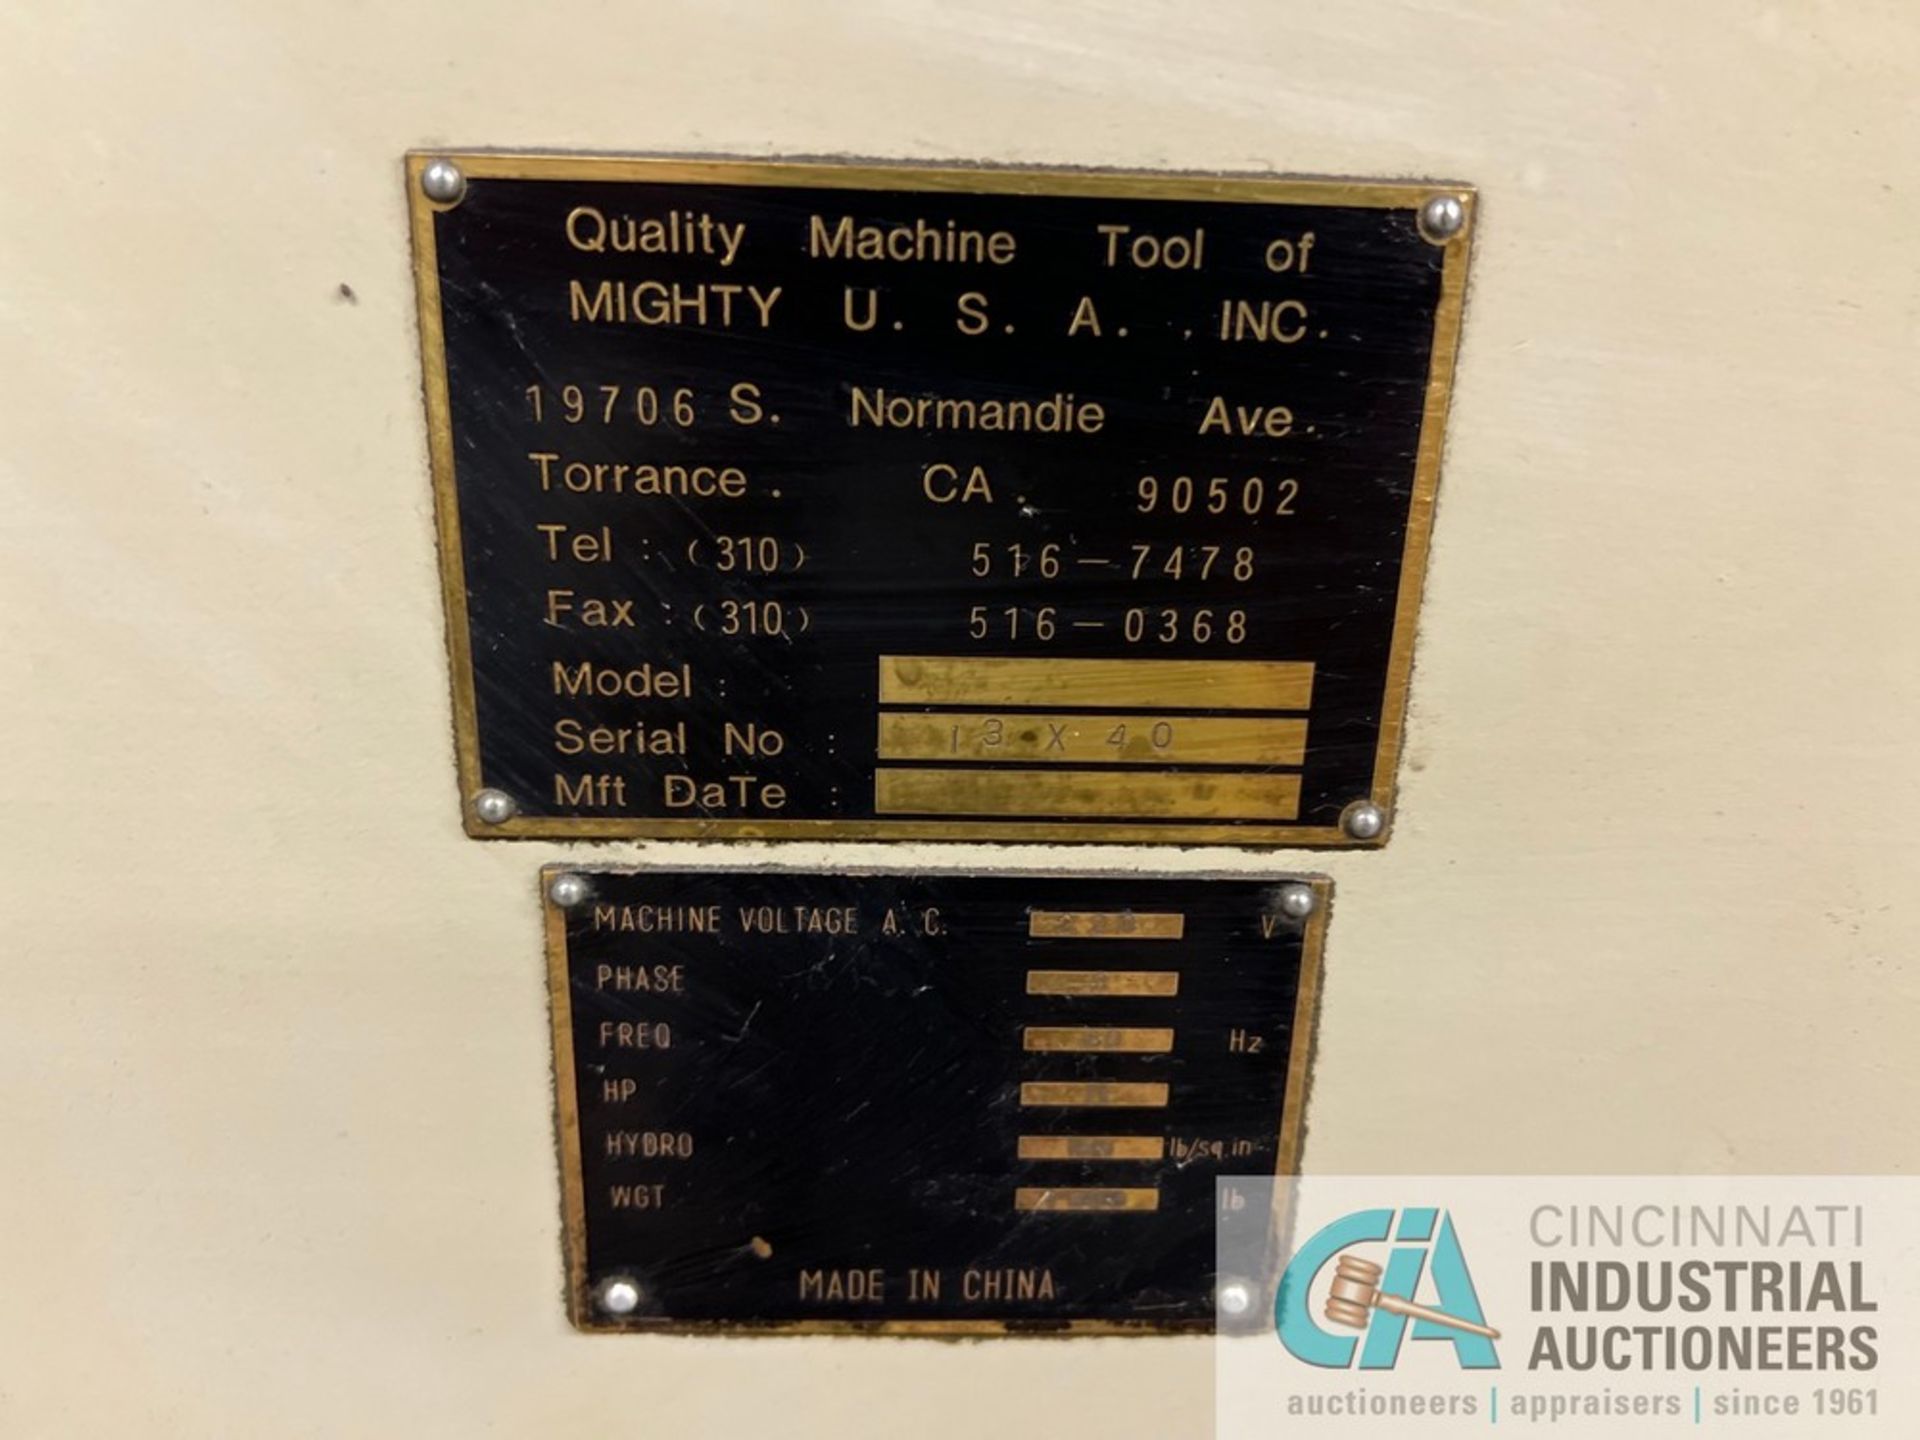 13" X 40" QUALITY MACHINE / MIGHTY OD GRINDER; S/N 13X40, 11 HP, 6" 3-JAW CHUCK, DAYTON DC SPEED - Image 8 of 12